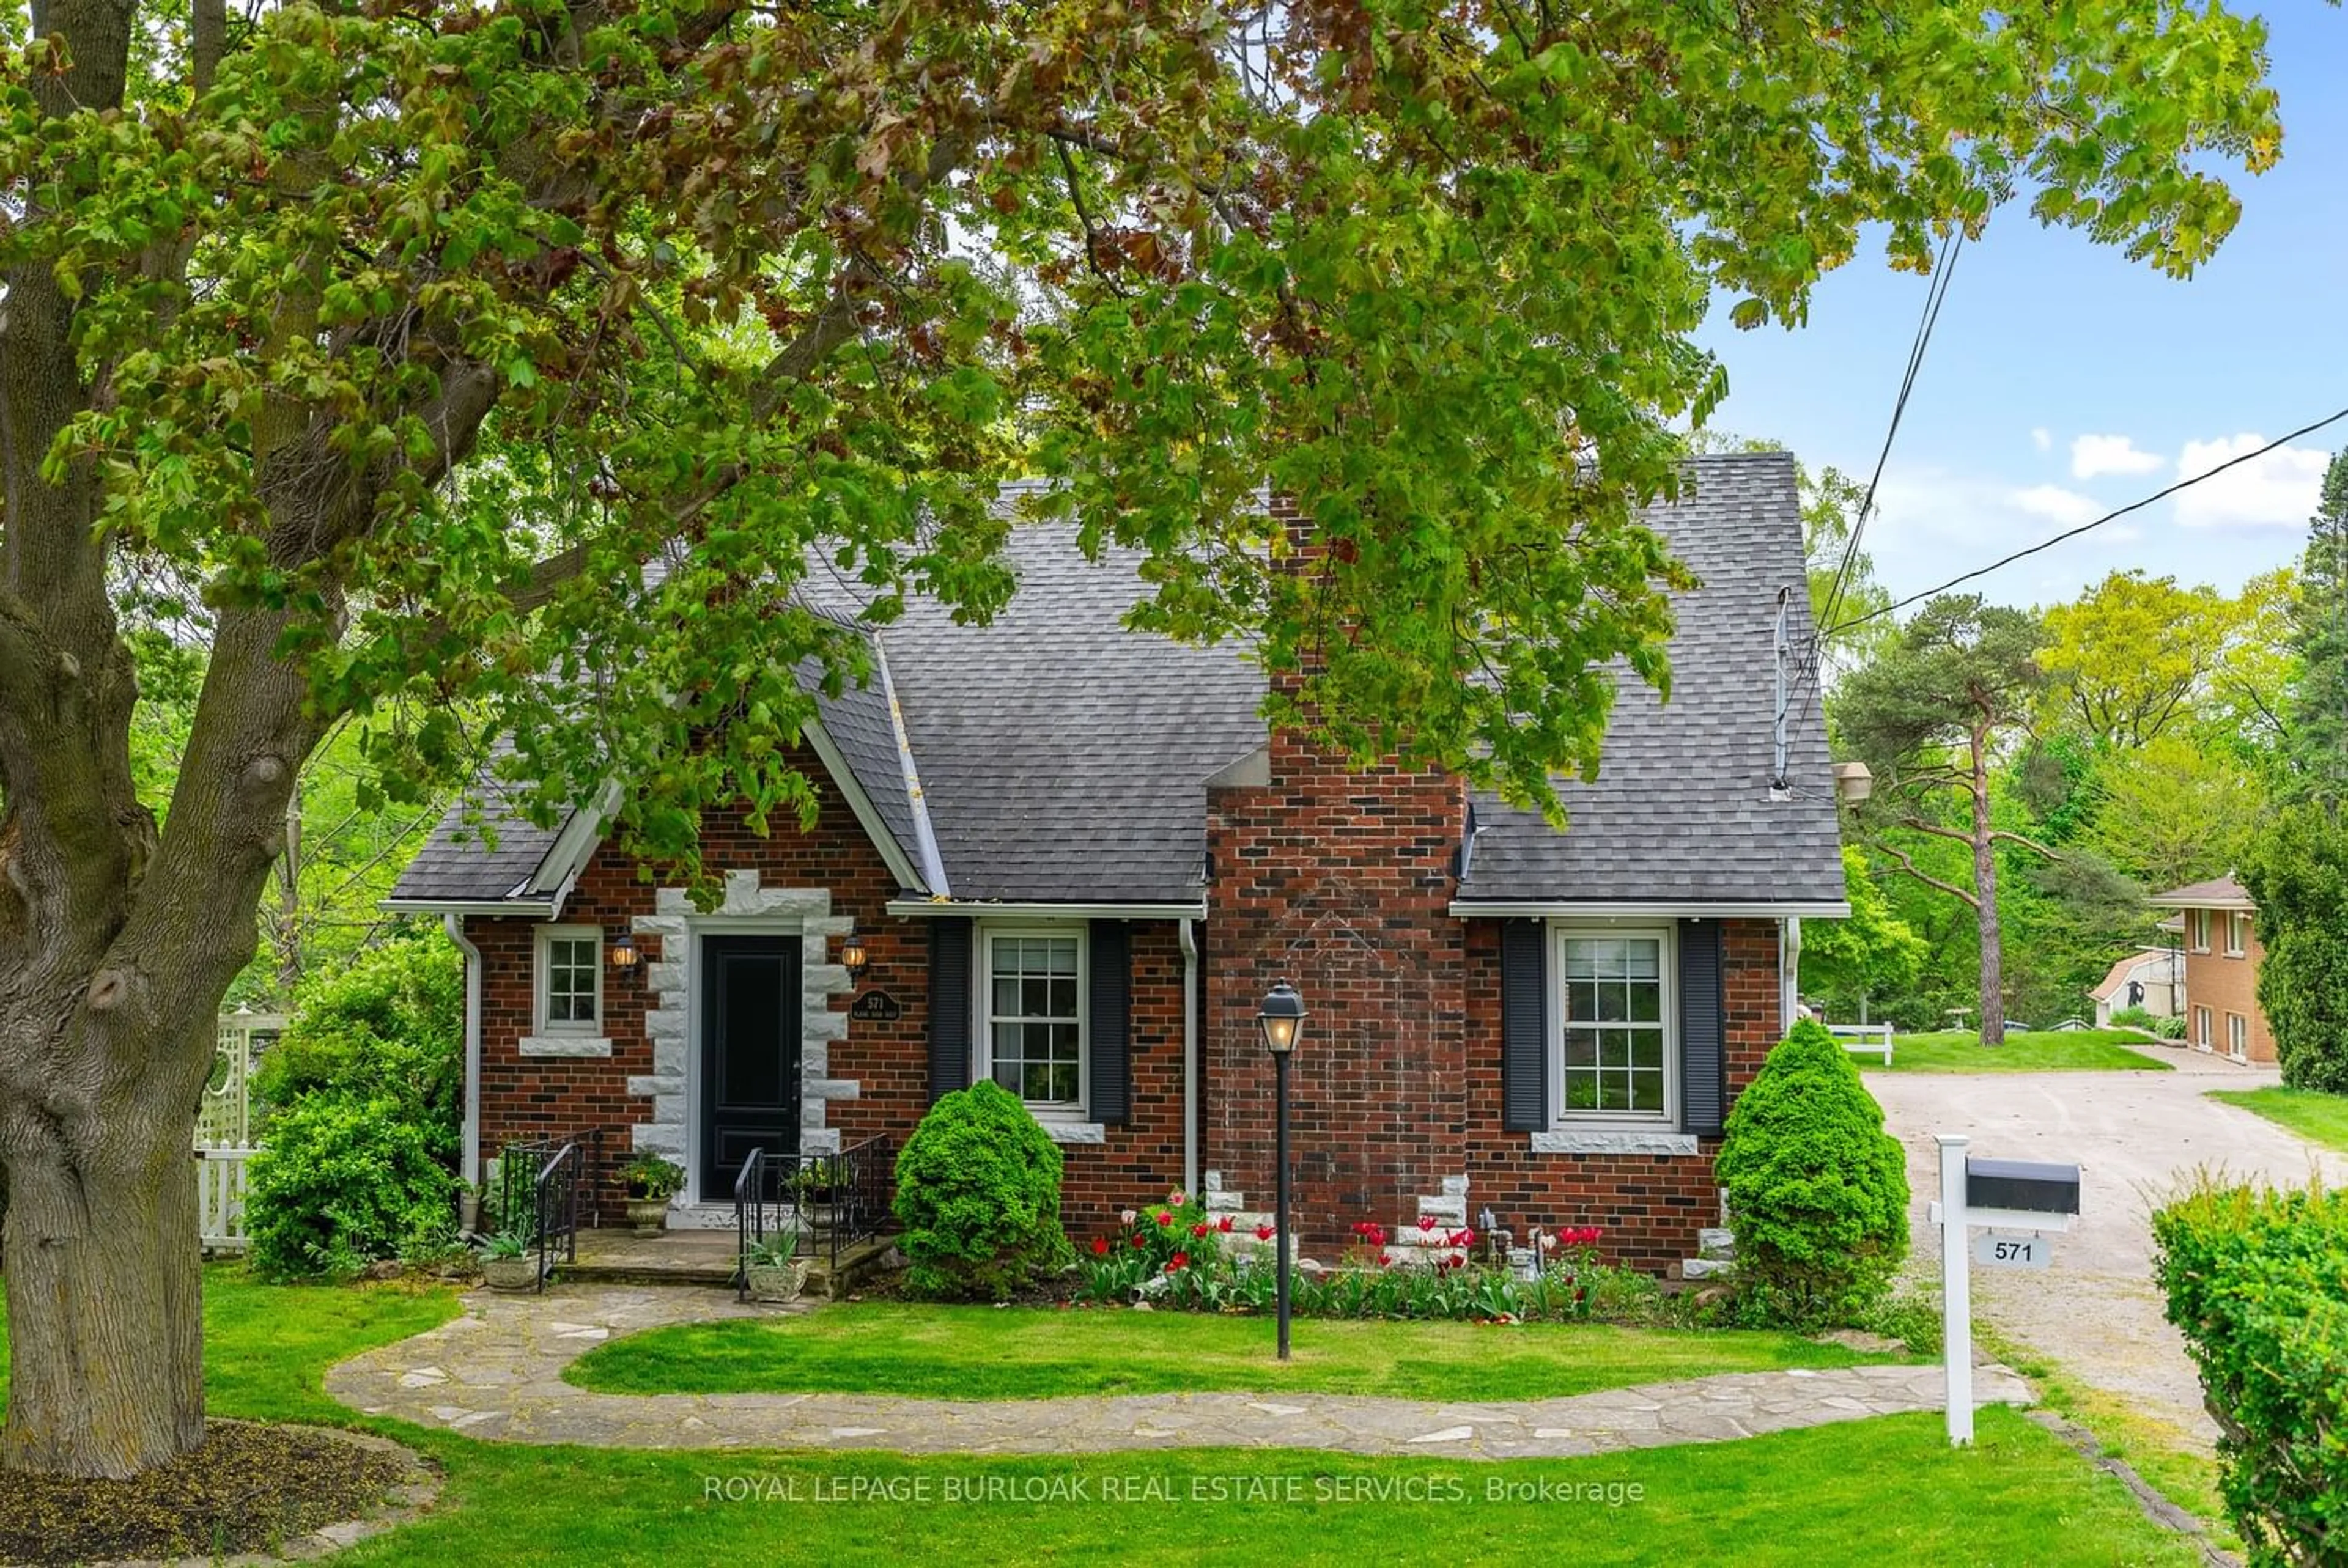 Home with brick exterior material for 571 Plains Rd, Burlington Ontario L7T 1H1